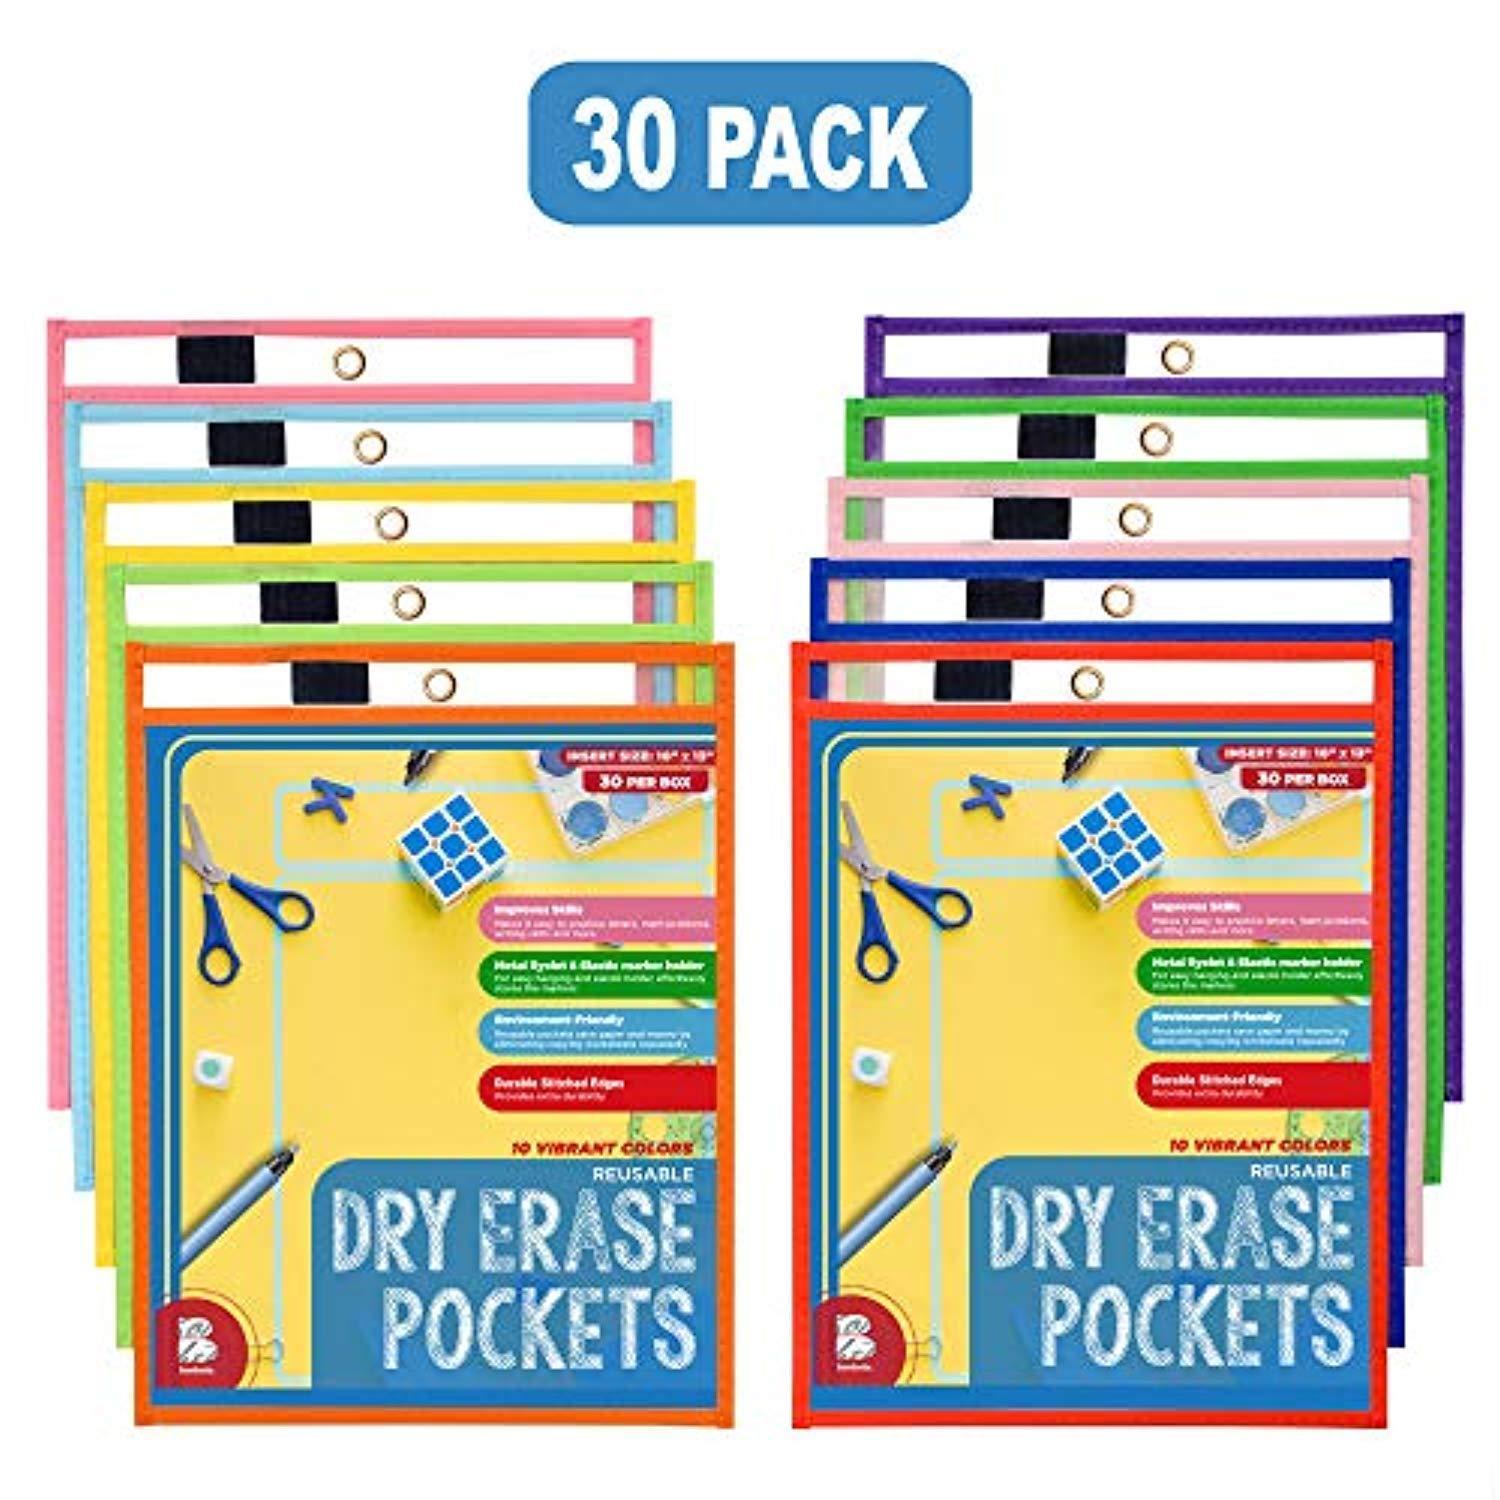 Dry Erase Pockets 30 Pack - Dry Erase Sleeves - Reusable Sheet